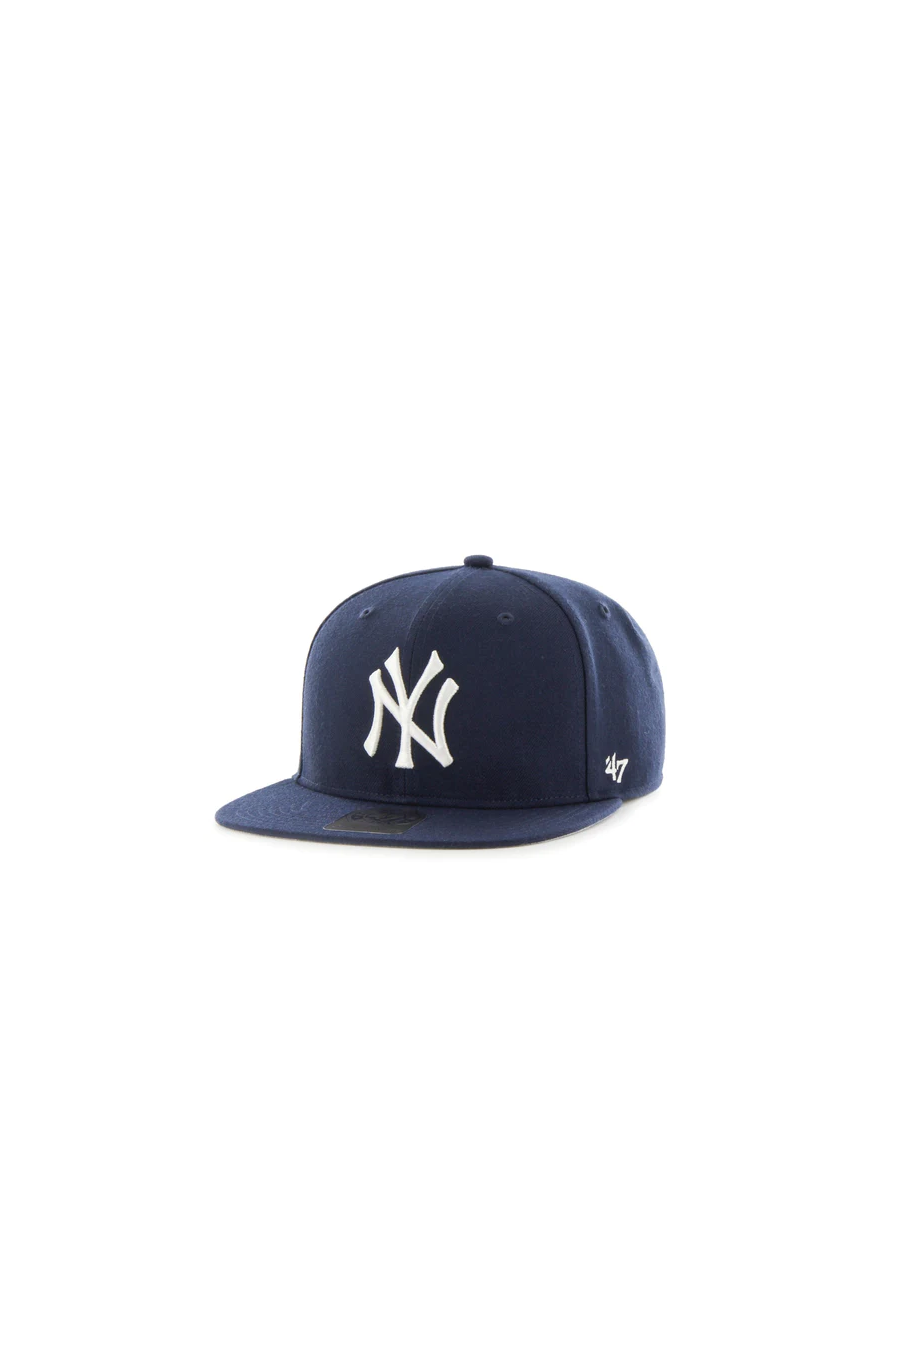 Gorra Plana 47Brand New York Yankees - Unisex